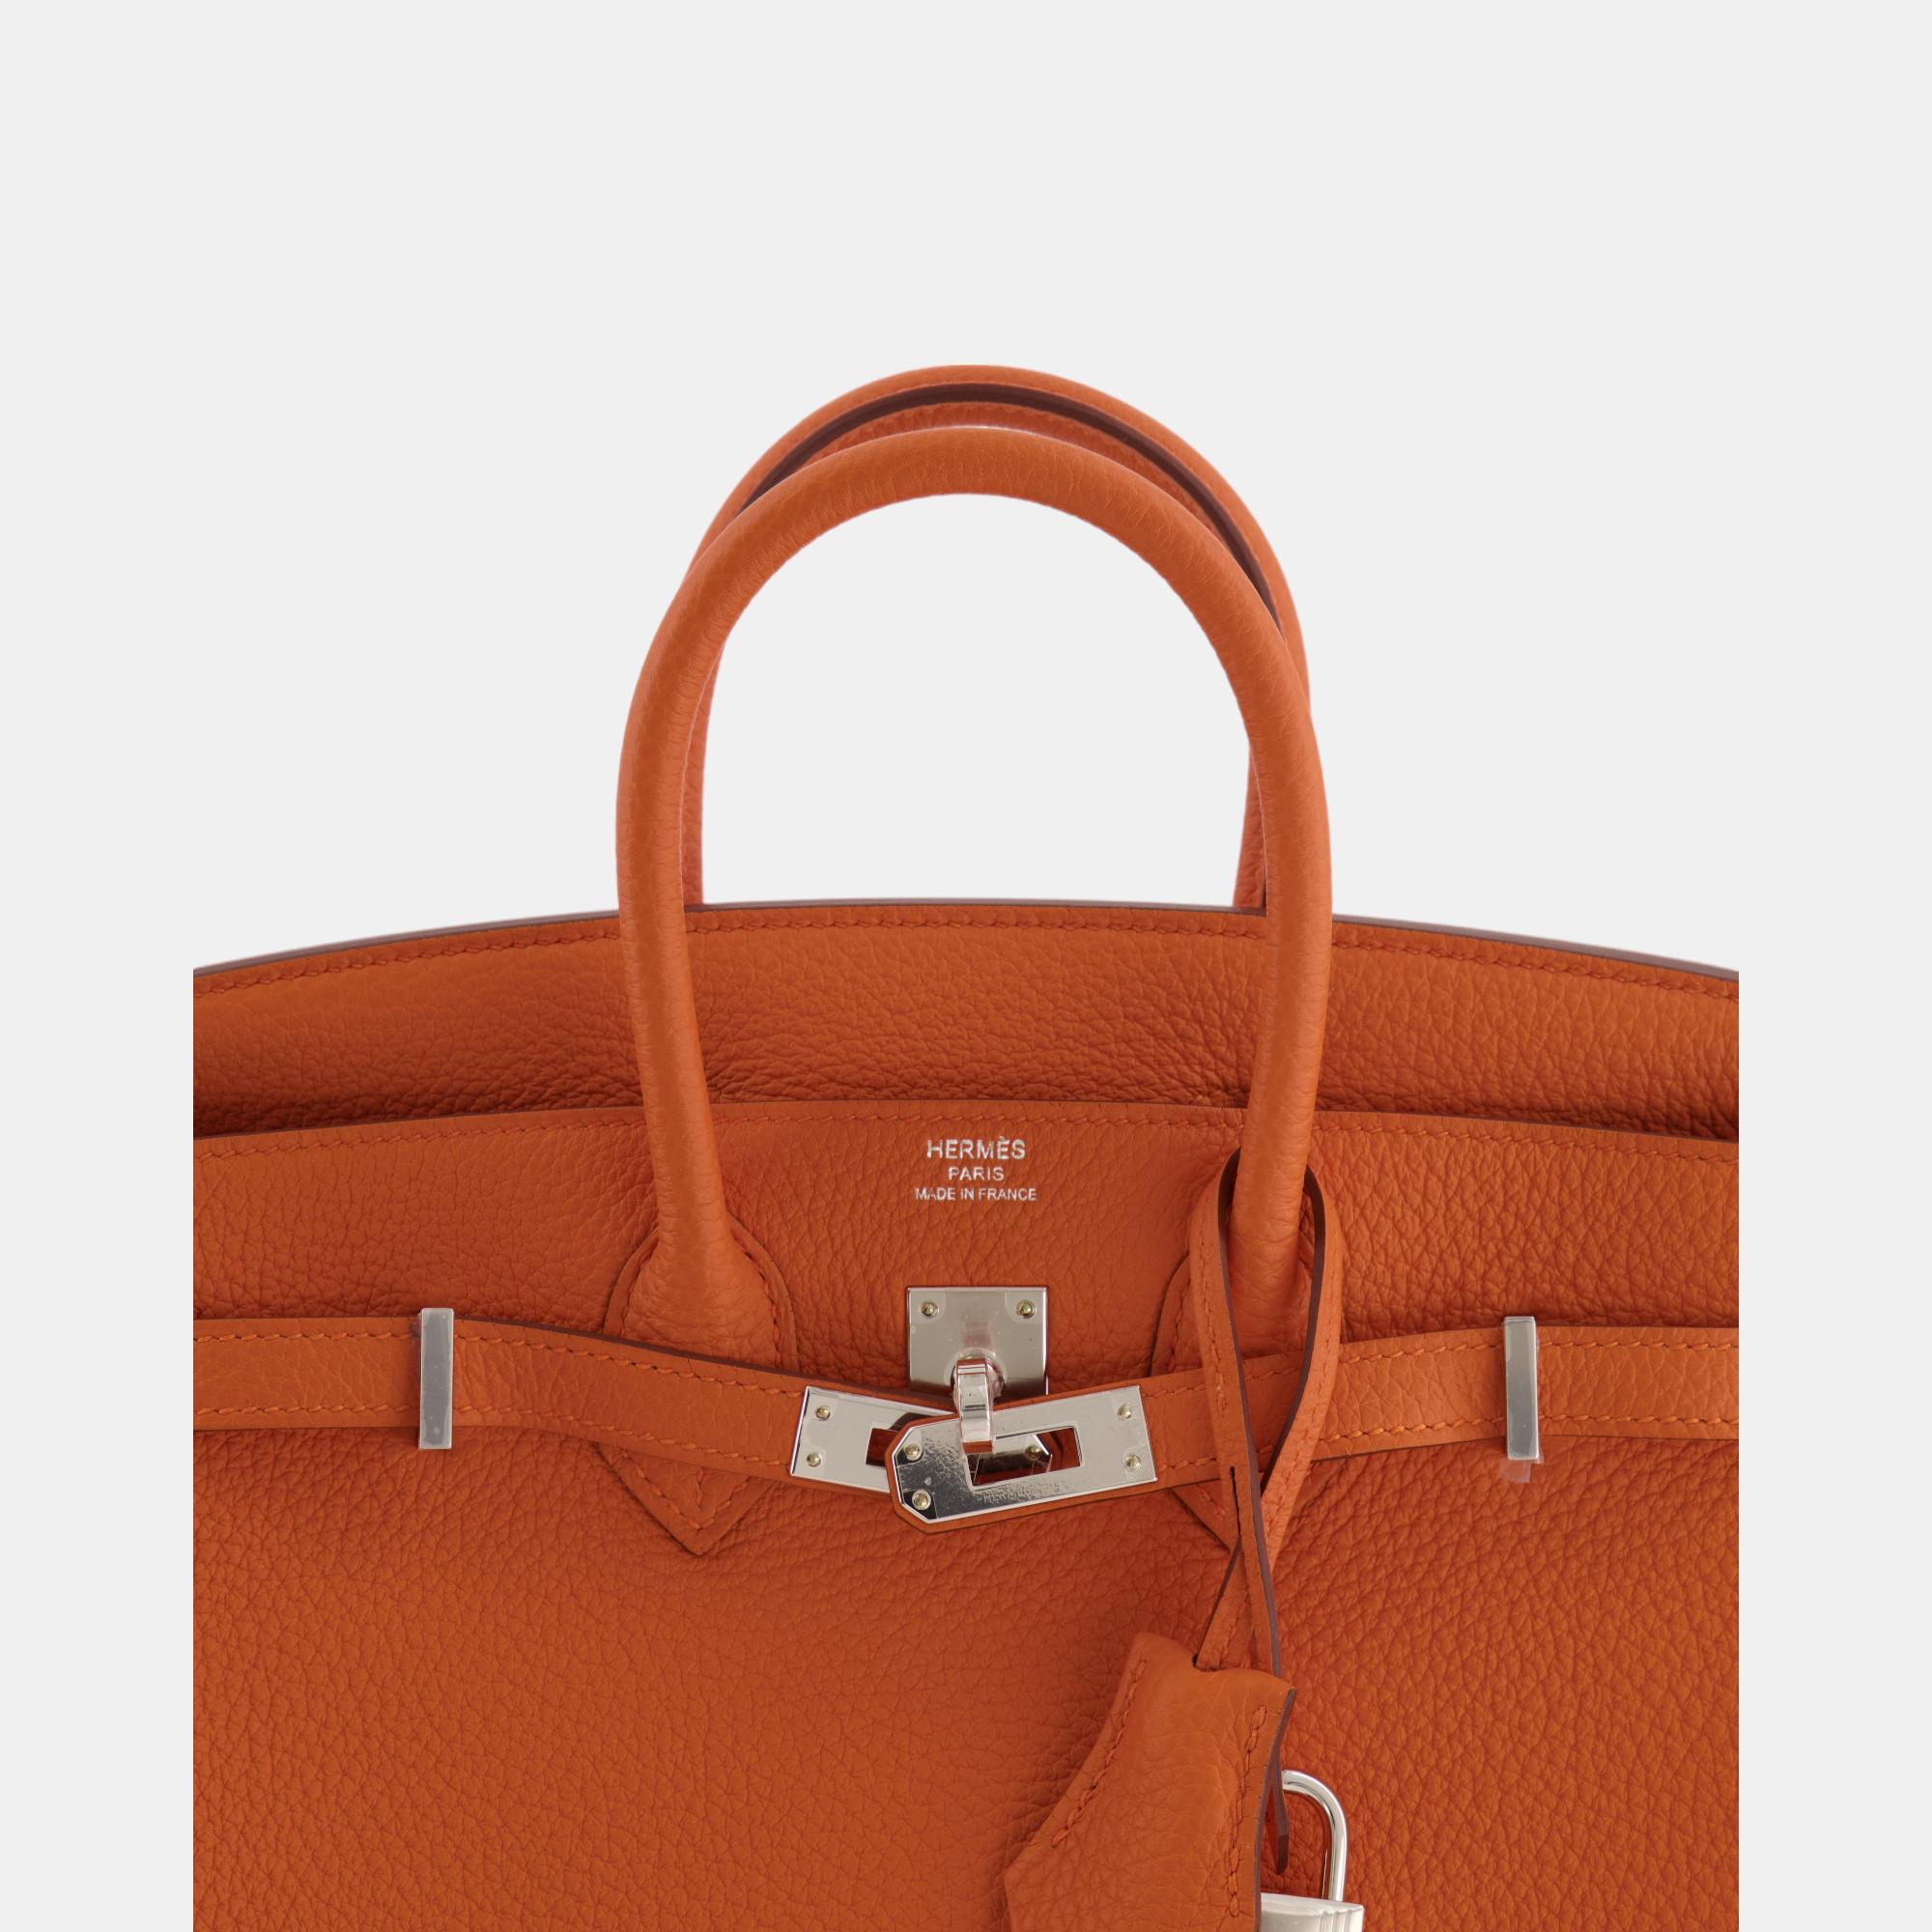 Hermes Birkin 25cm Retourne Bag In Orange Togo Leather With Palladium Hardware